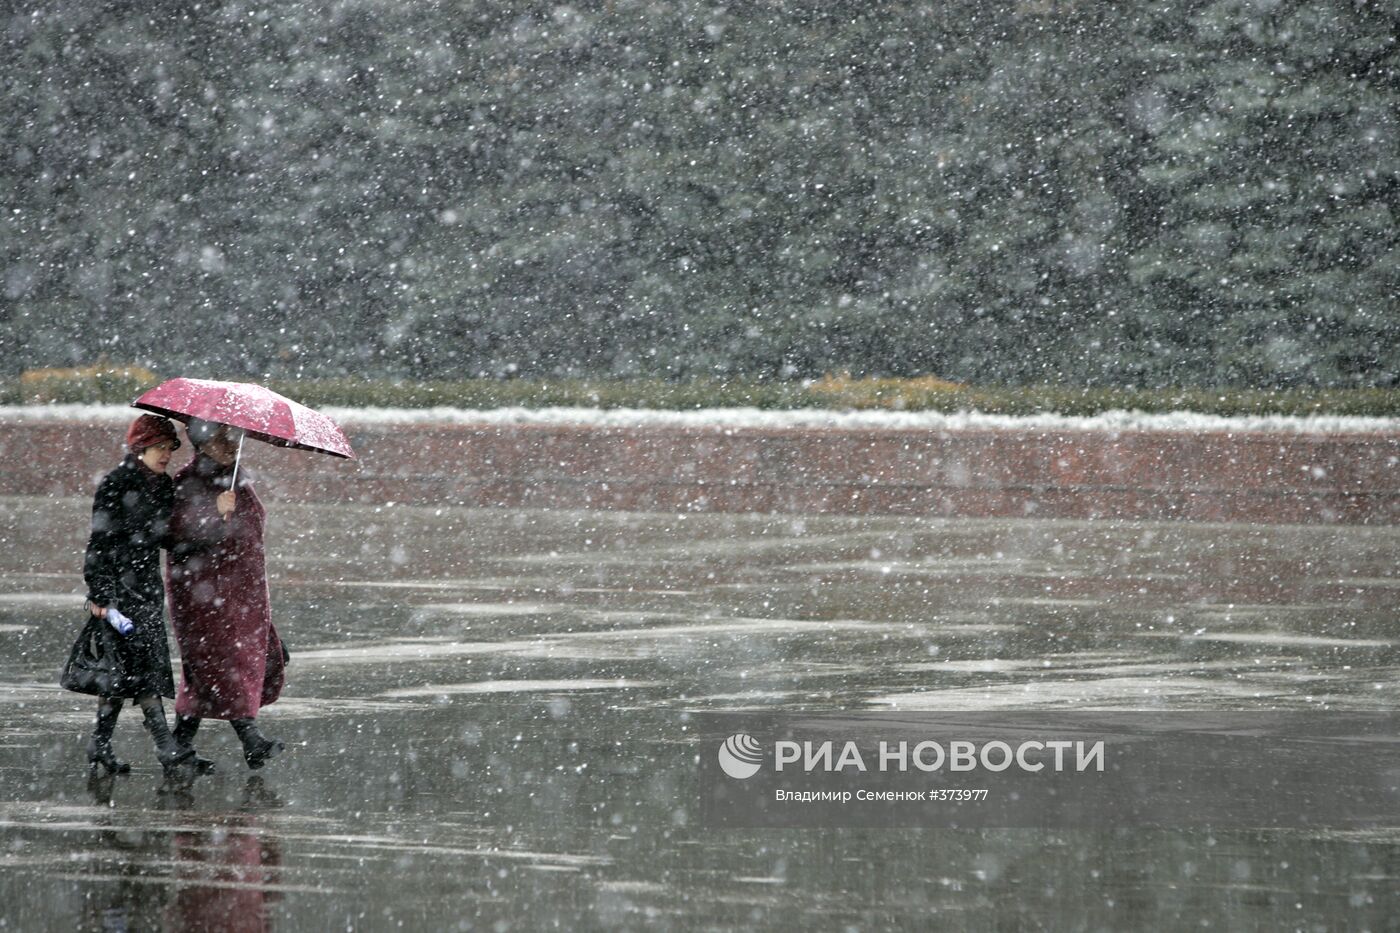 Снегопад в Ставрополе